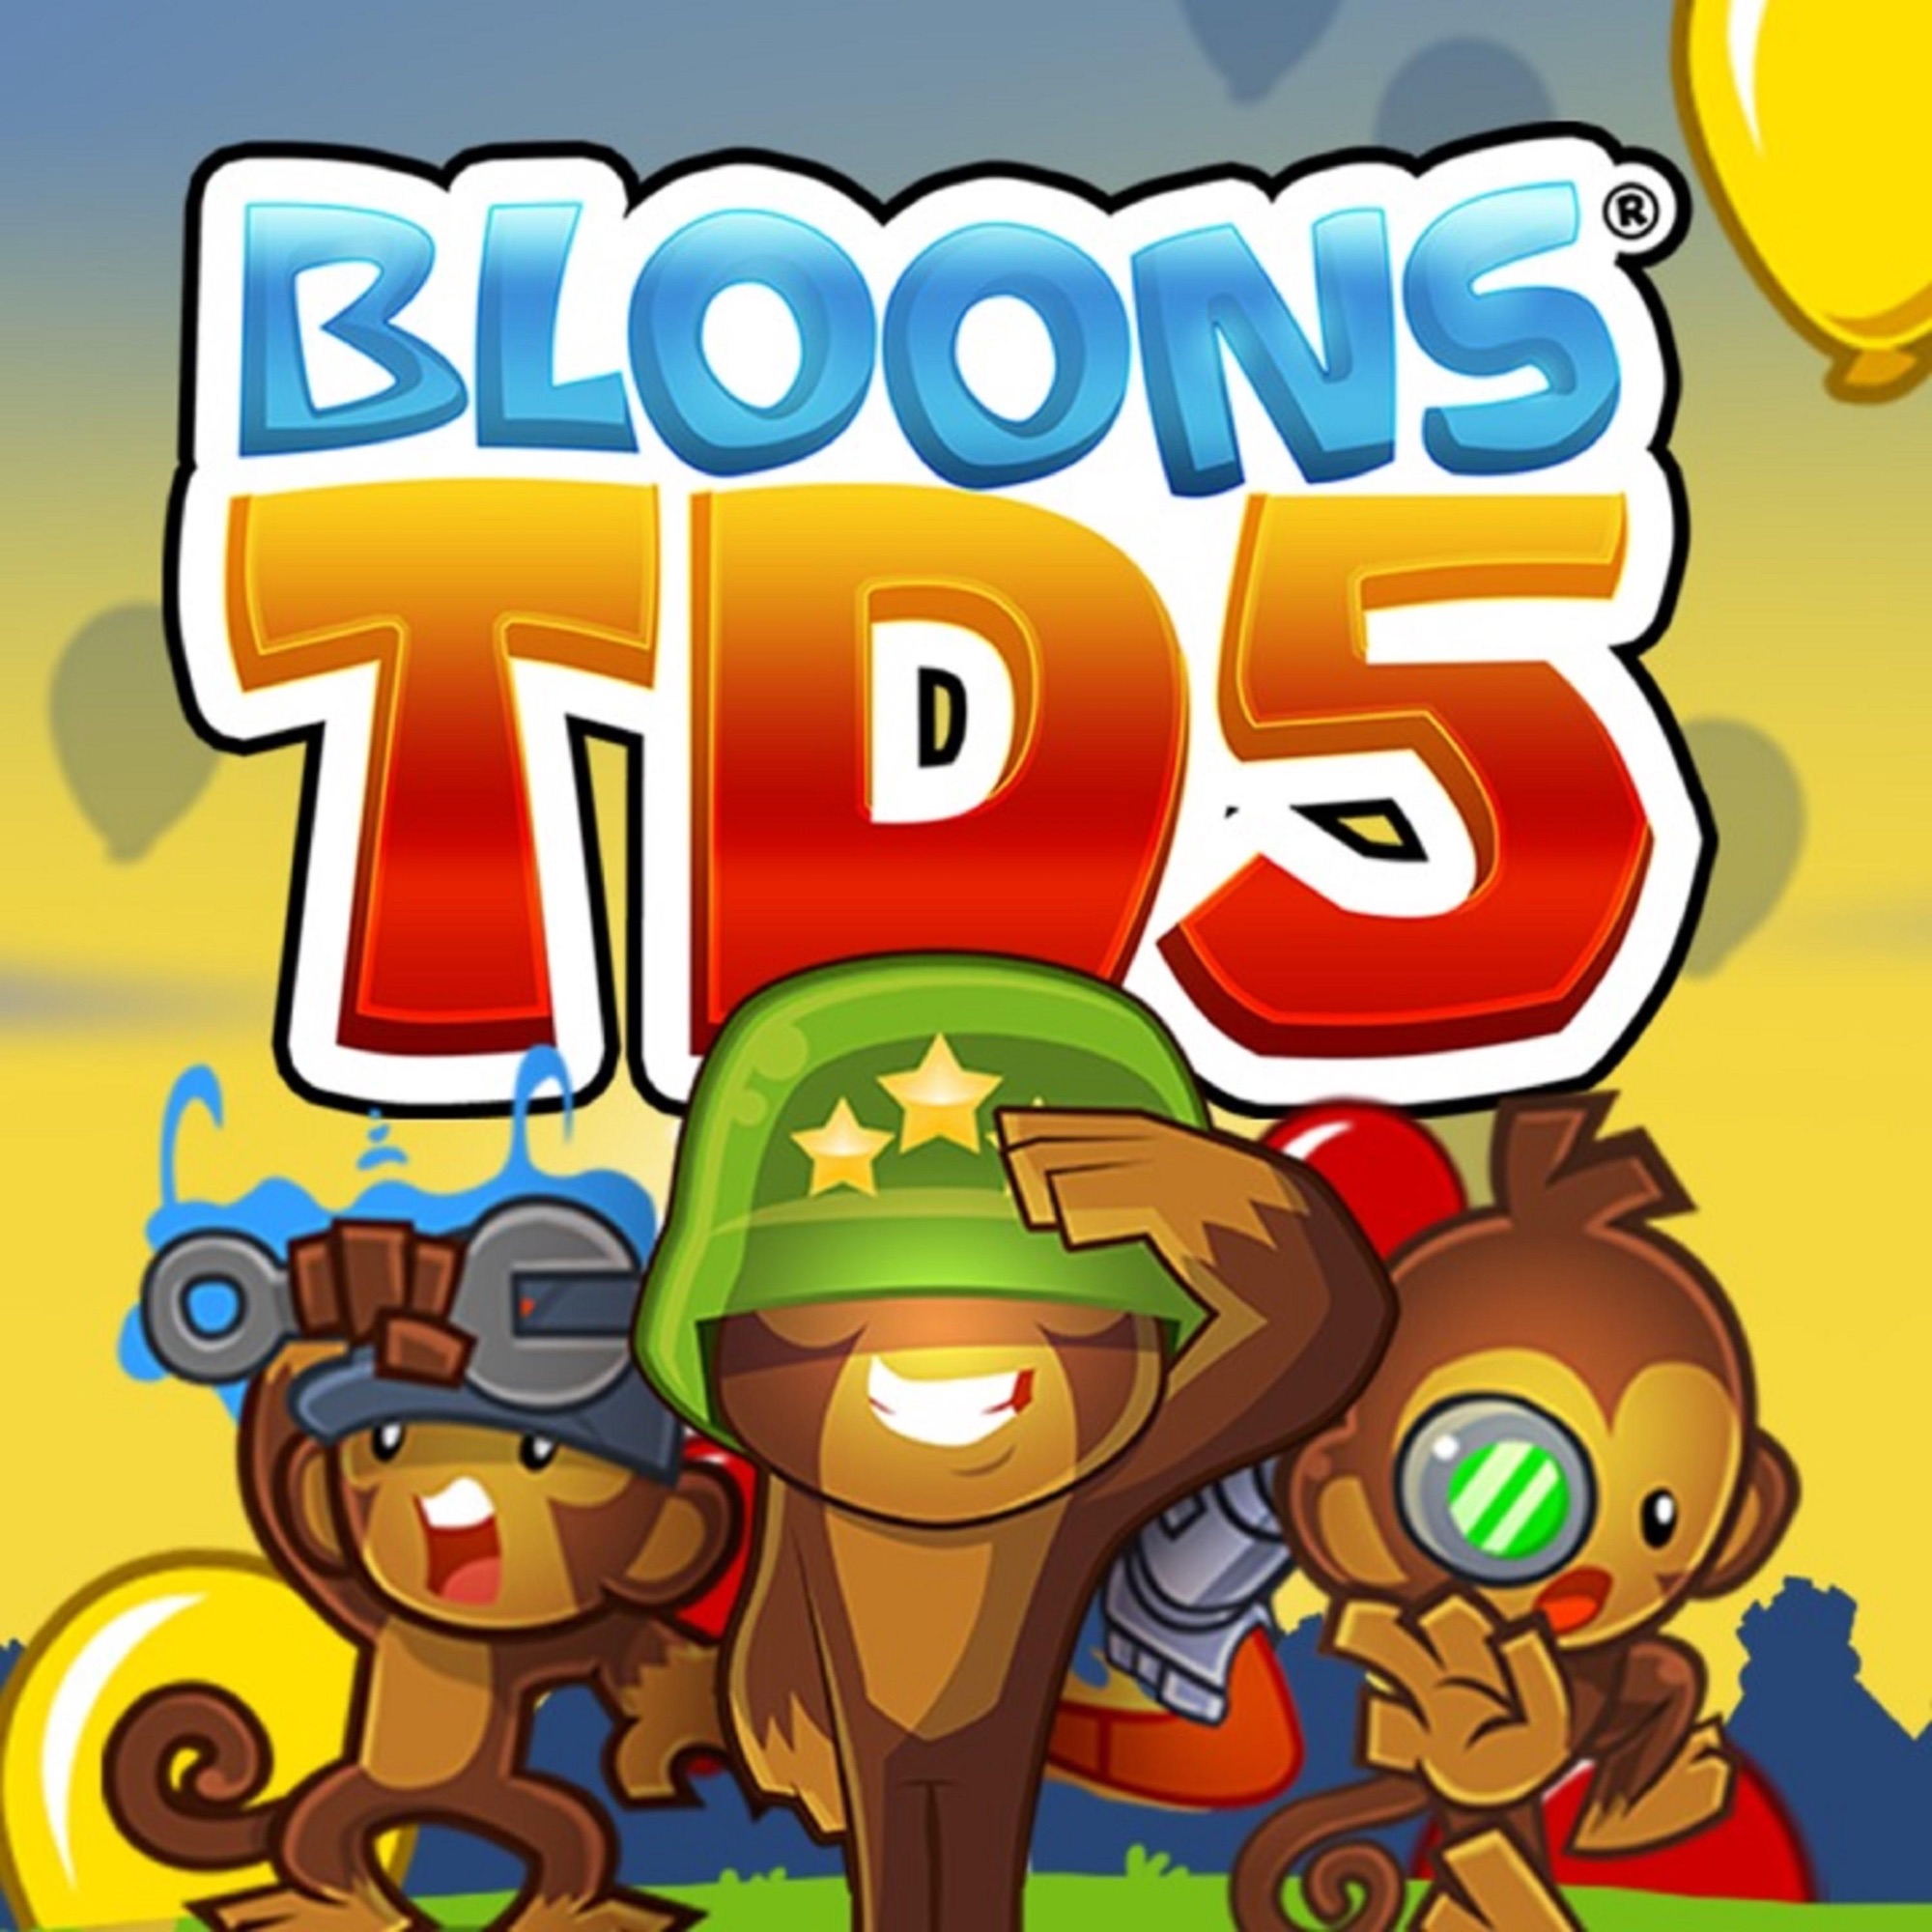 Bloons Tower Defense 5 Review & Videos | Asphodel Gaming